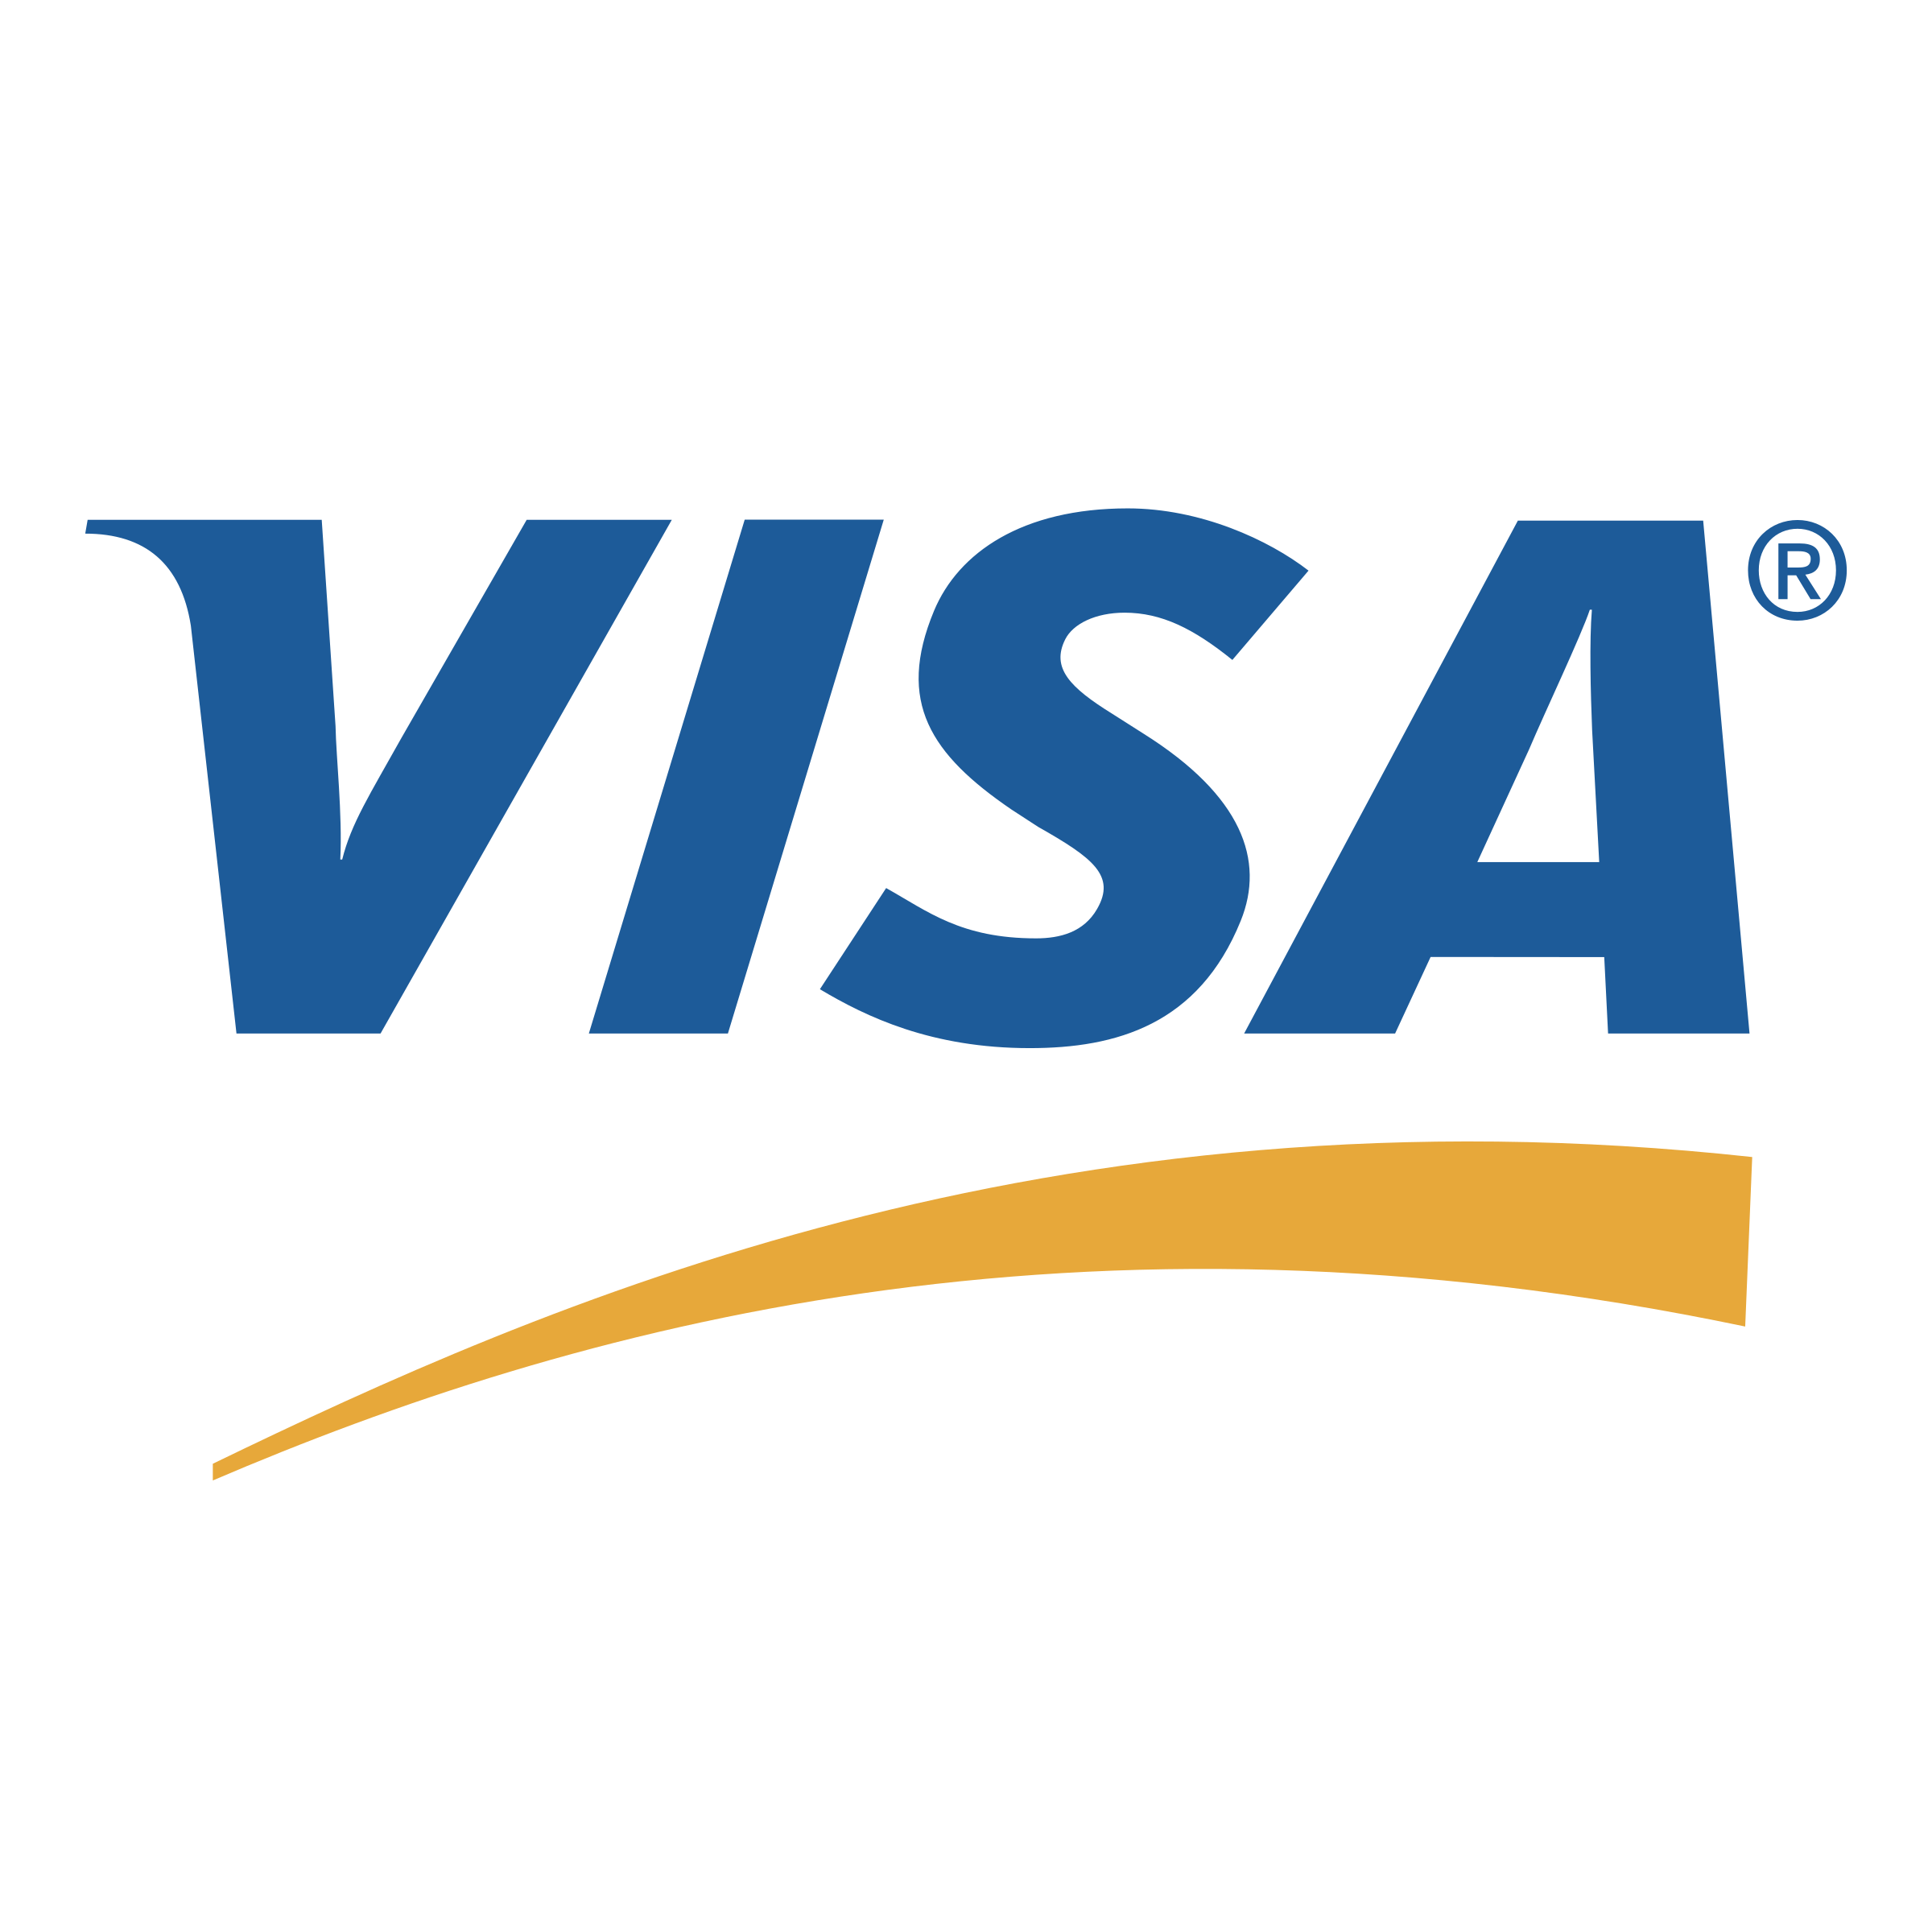 Visa Logo And Symbol, Meaning